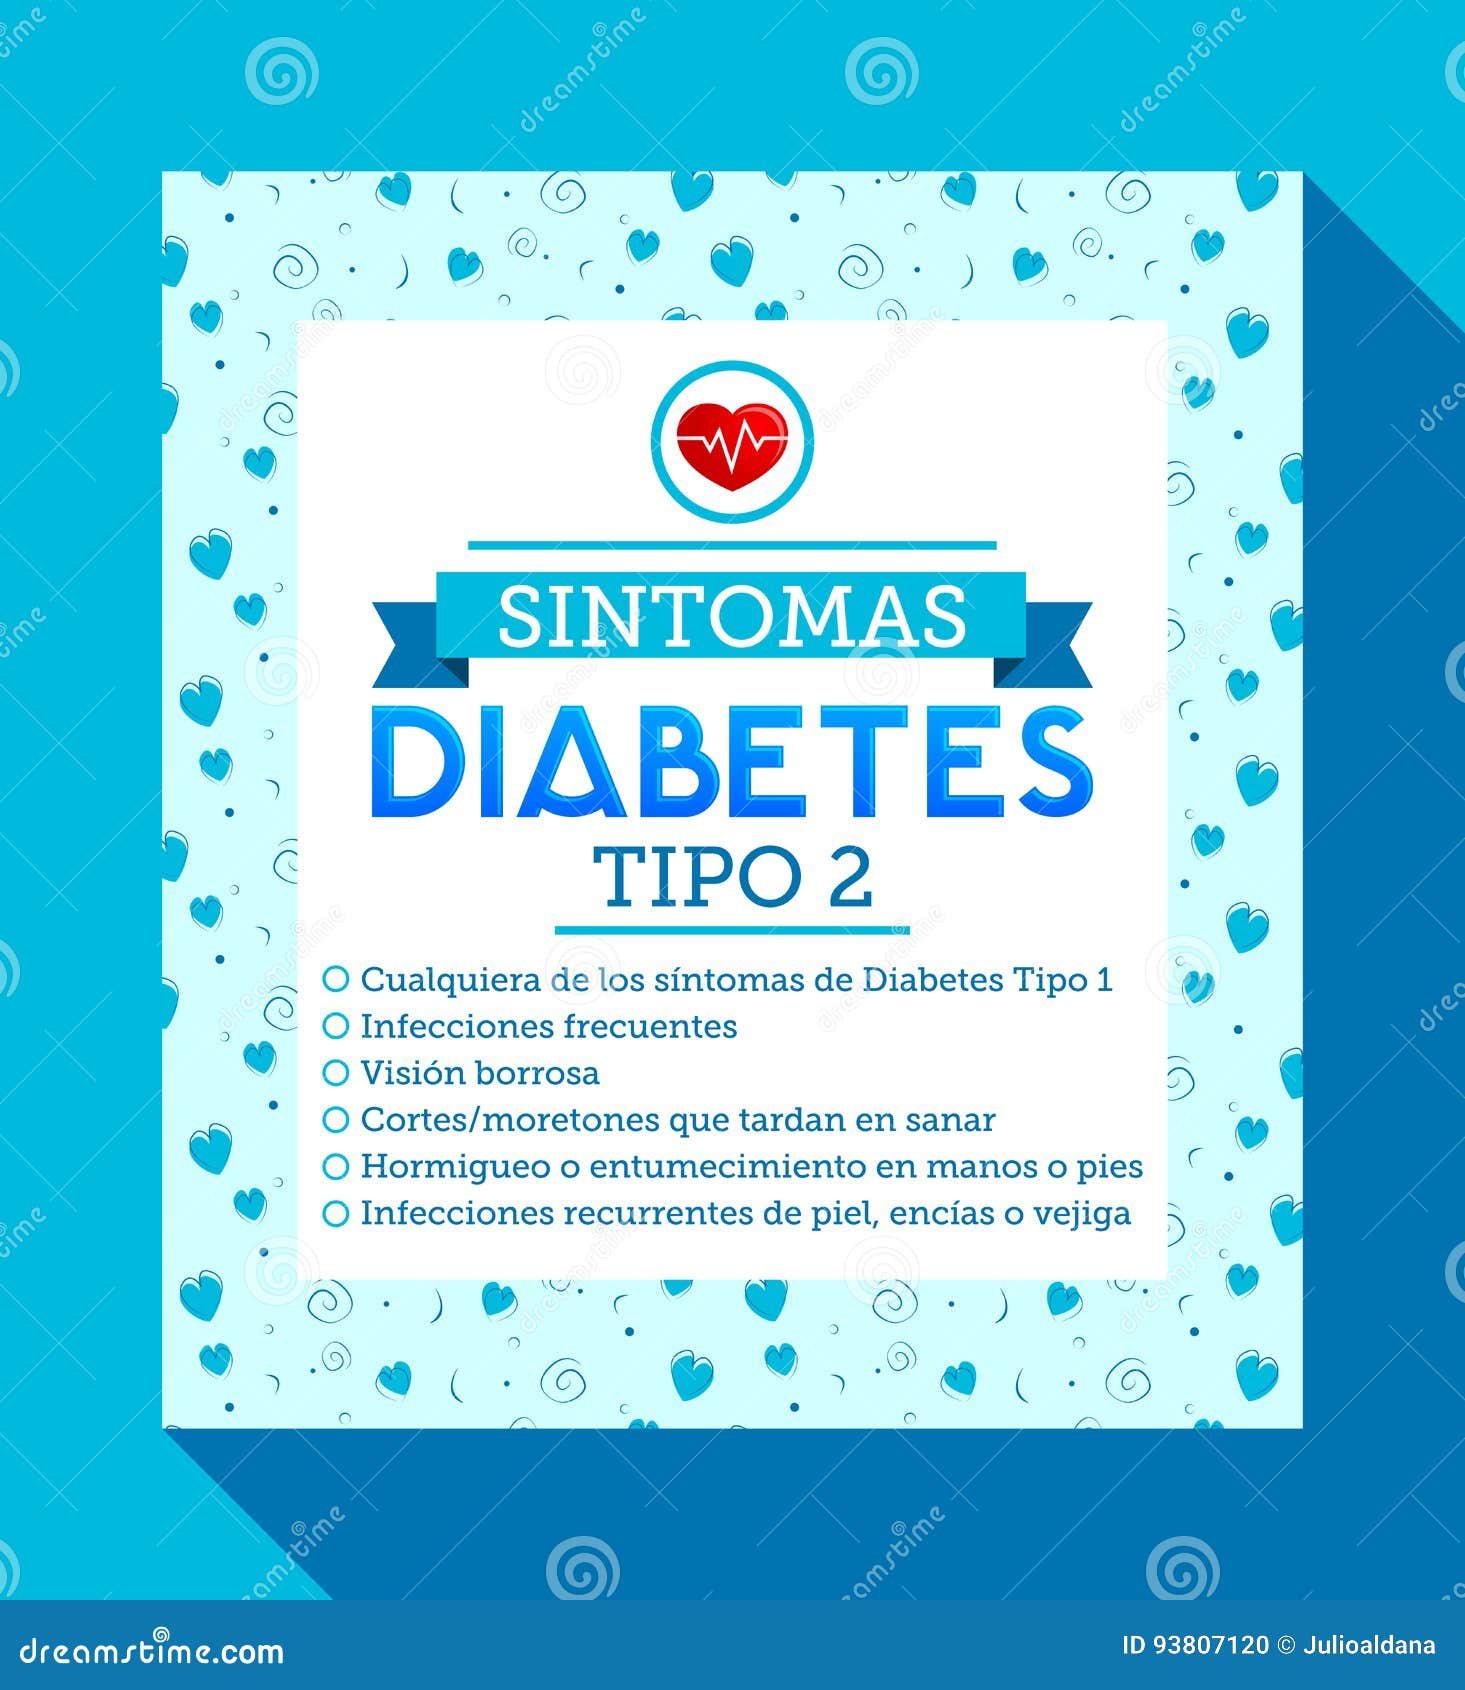 sintomas diabetes tipo 2, spanish translation: symptoms of type 2 diabetes